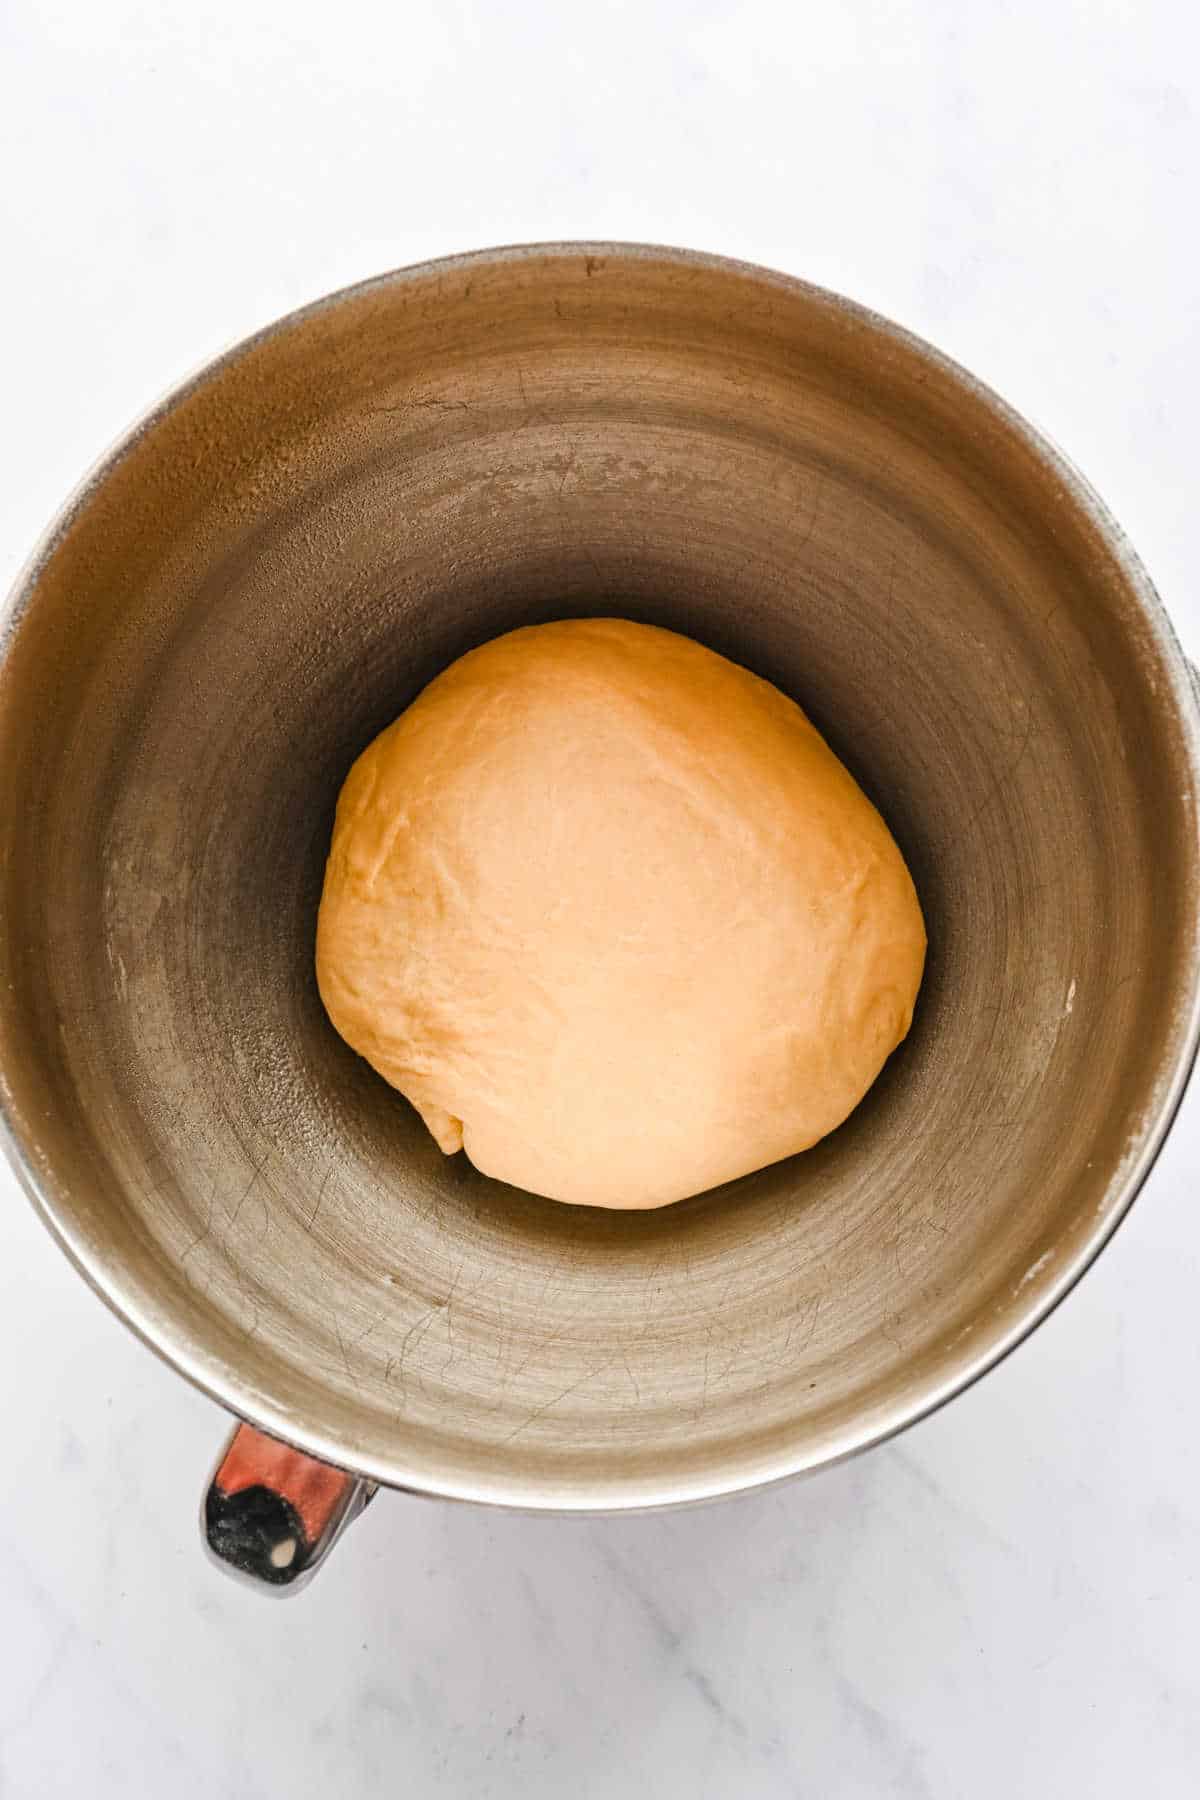 Unrisen cinnamon roll dough in a silver mixing bowl. 